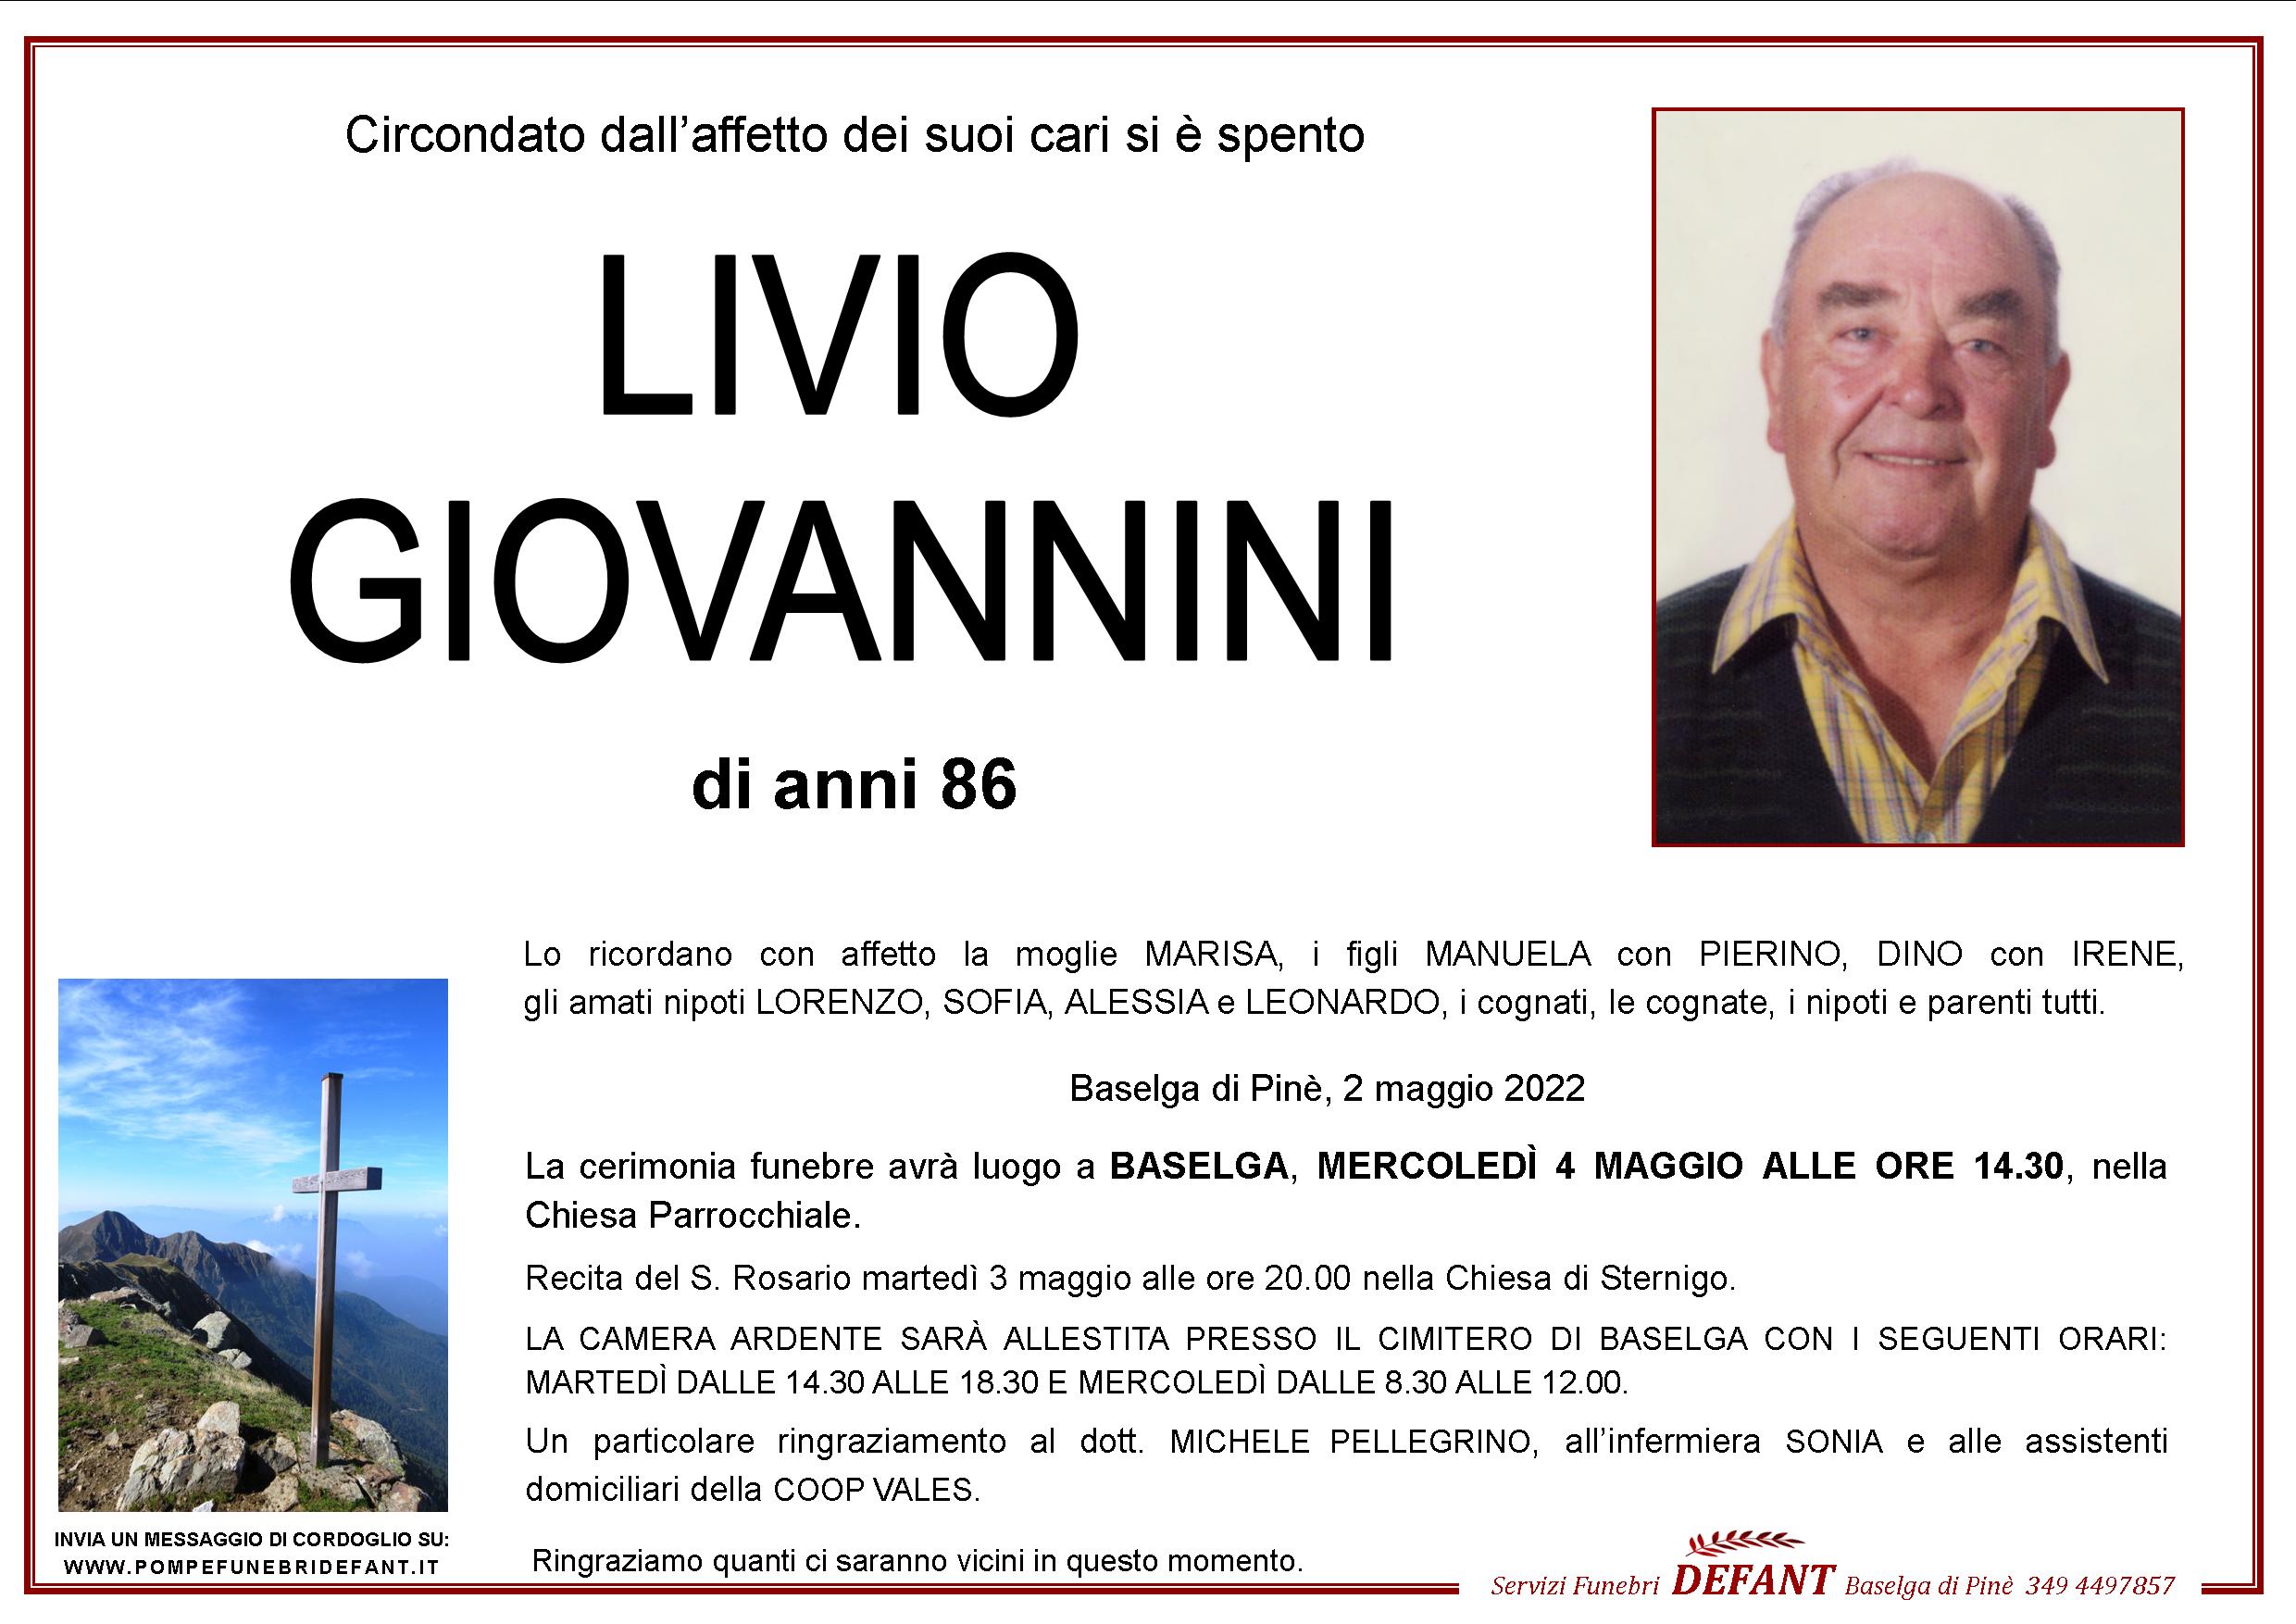 Livio Giovannini